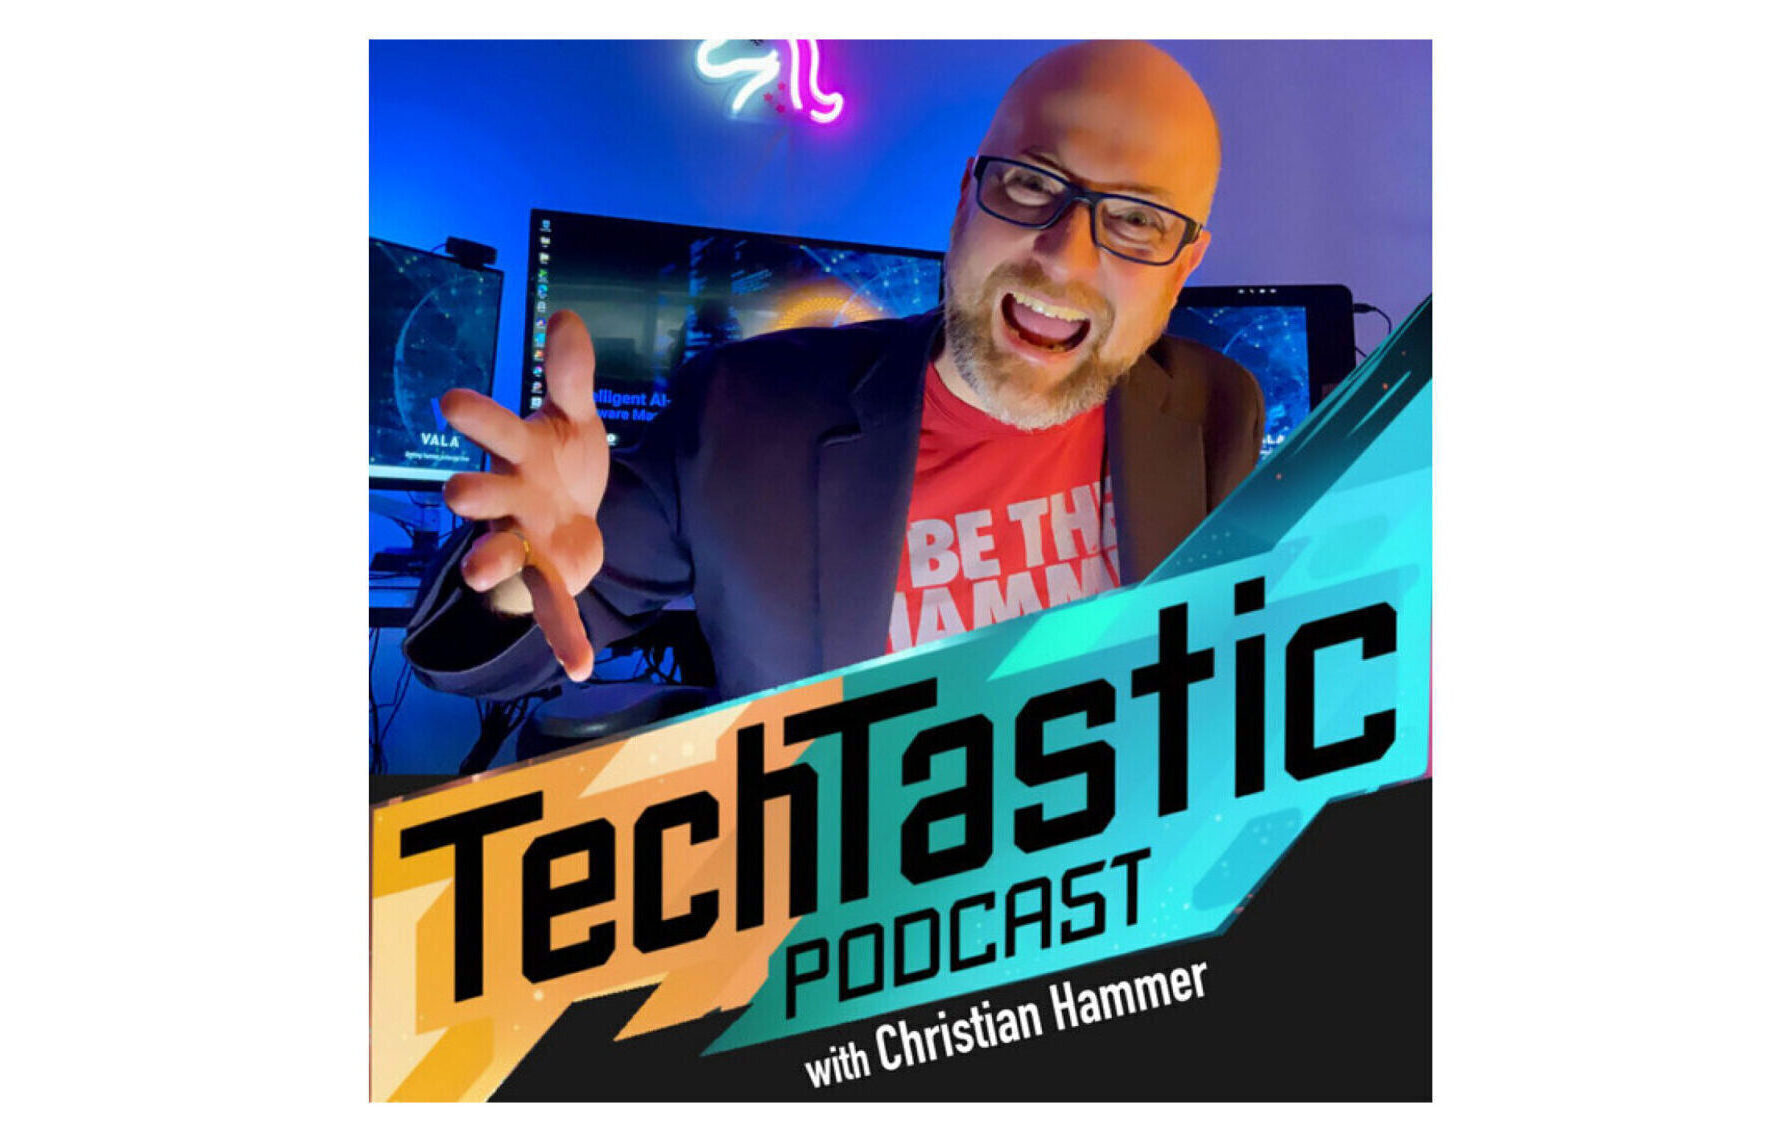 Techtastic Podcast